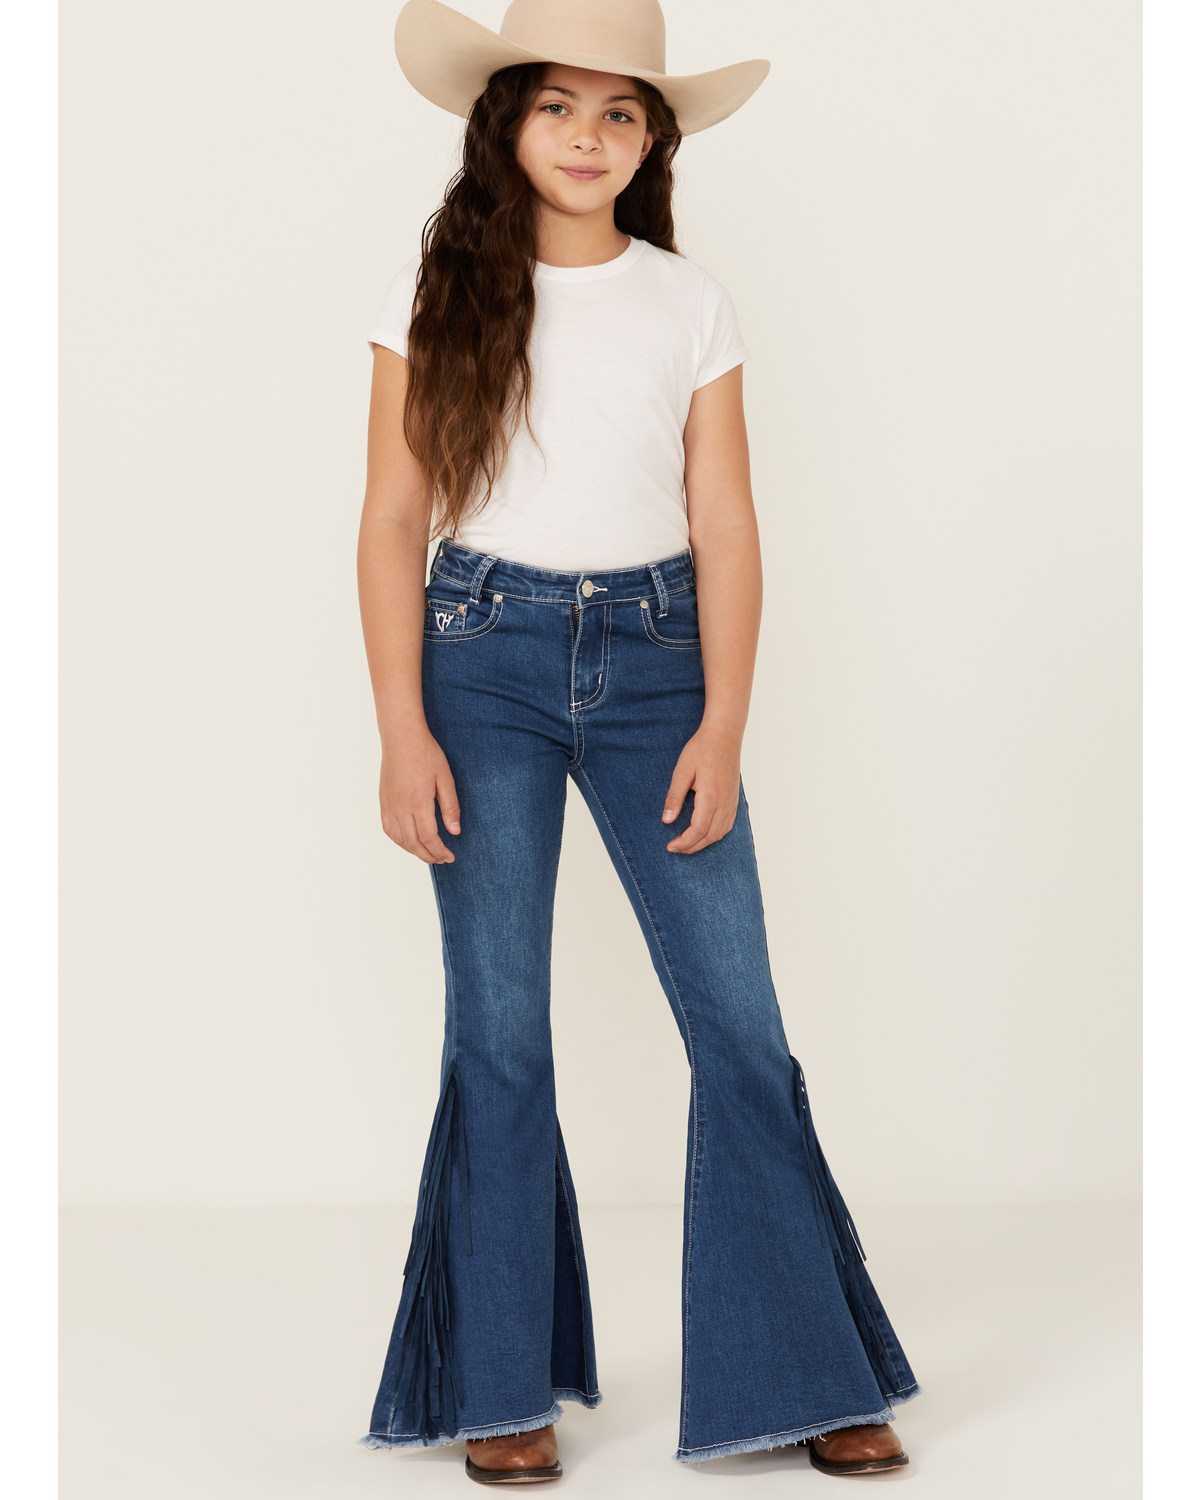 Cowgirl Hardware Girls' Fringe Bell Bottom Stretch Denim Jeans